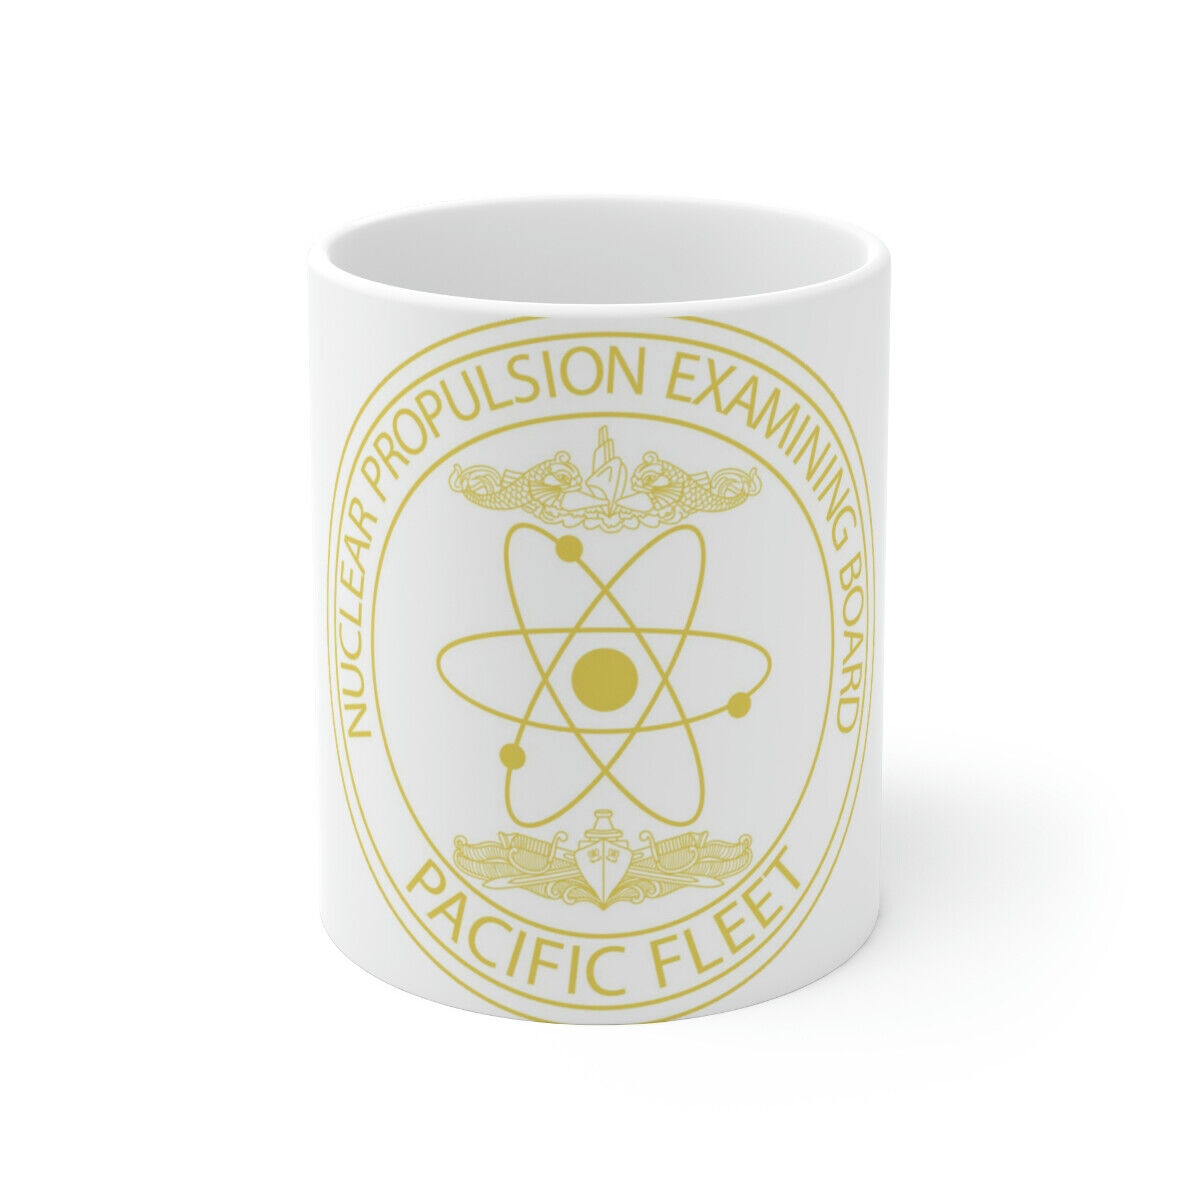 Nuclear Propulsion Examining Board Pac Fleet (U.S. Navy) White Coffee Cup 11oz